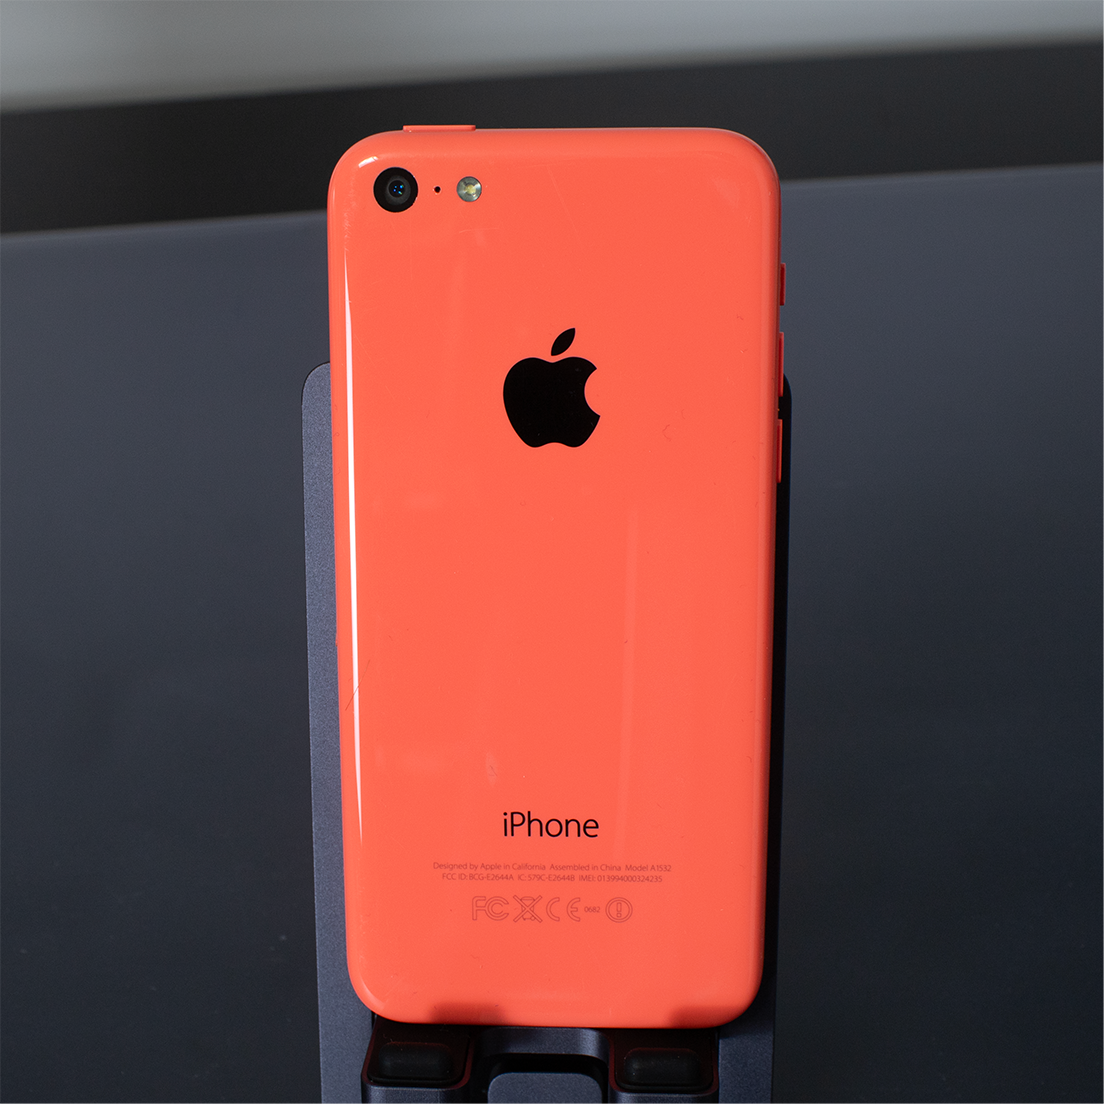 RARE iPhone 5C - 16GB - iOS 8.1.3 - Unlocked - Good condition